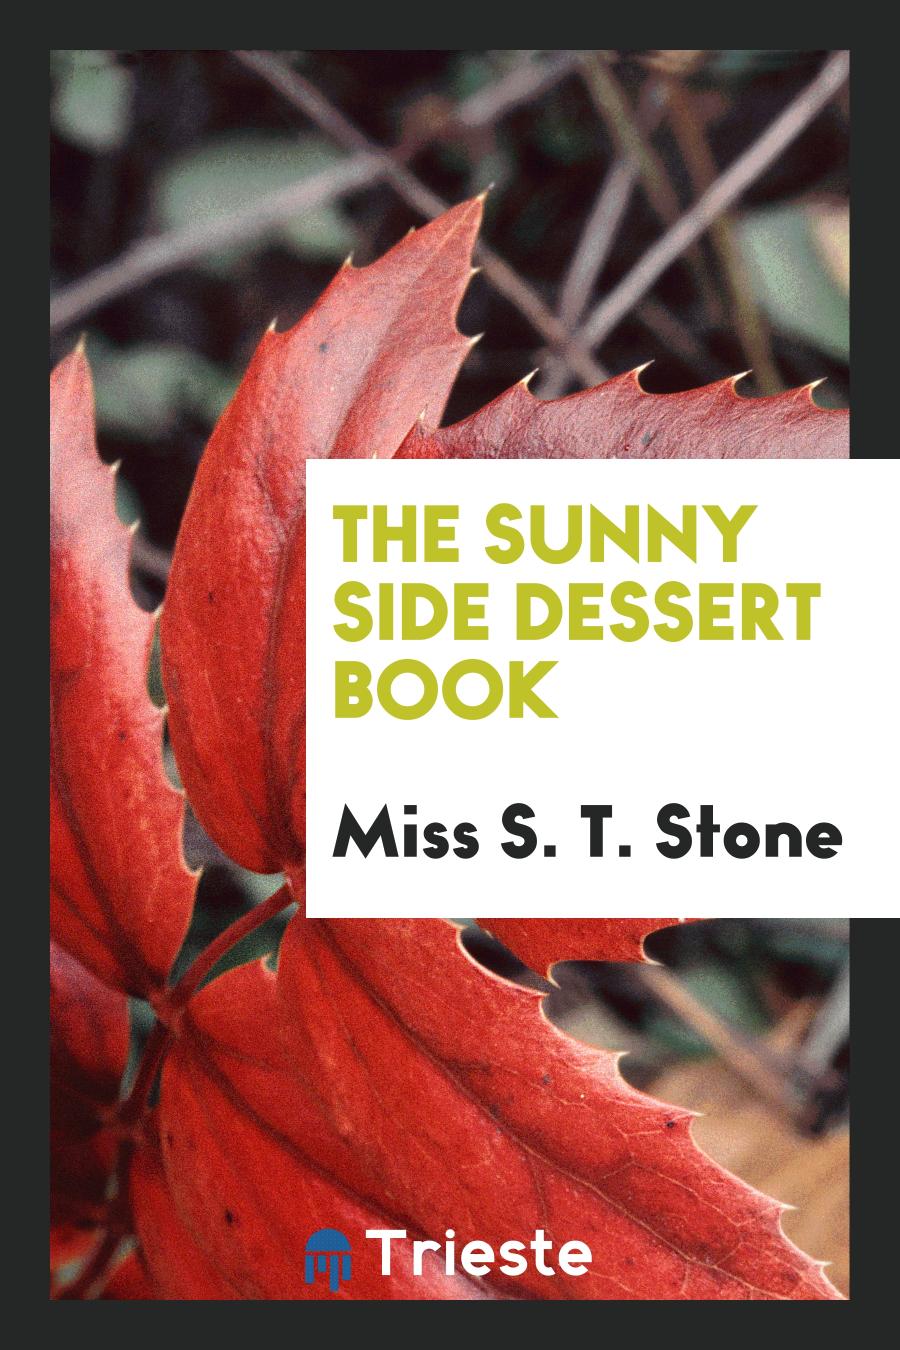 The Sunny Side Dessert Book